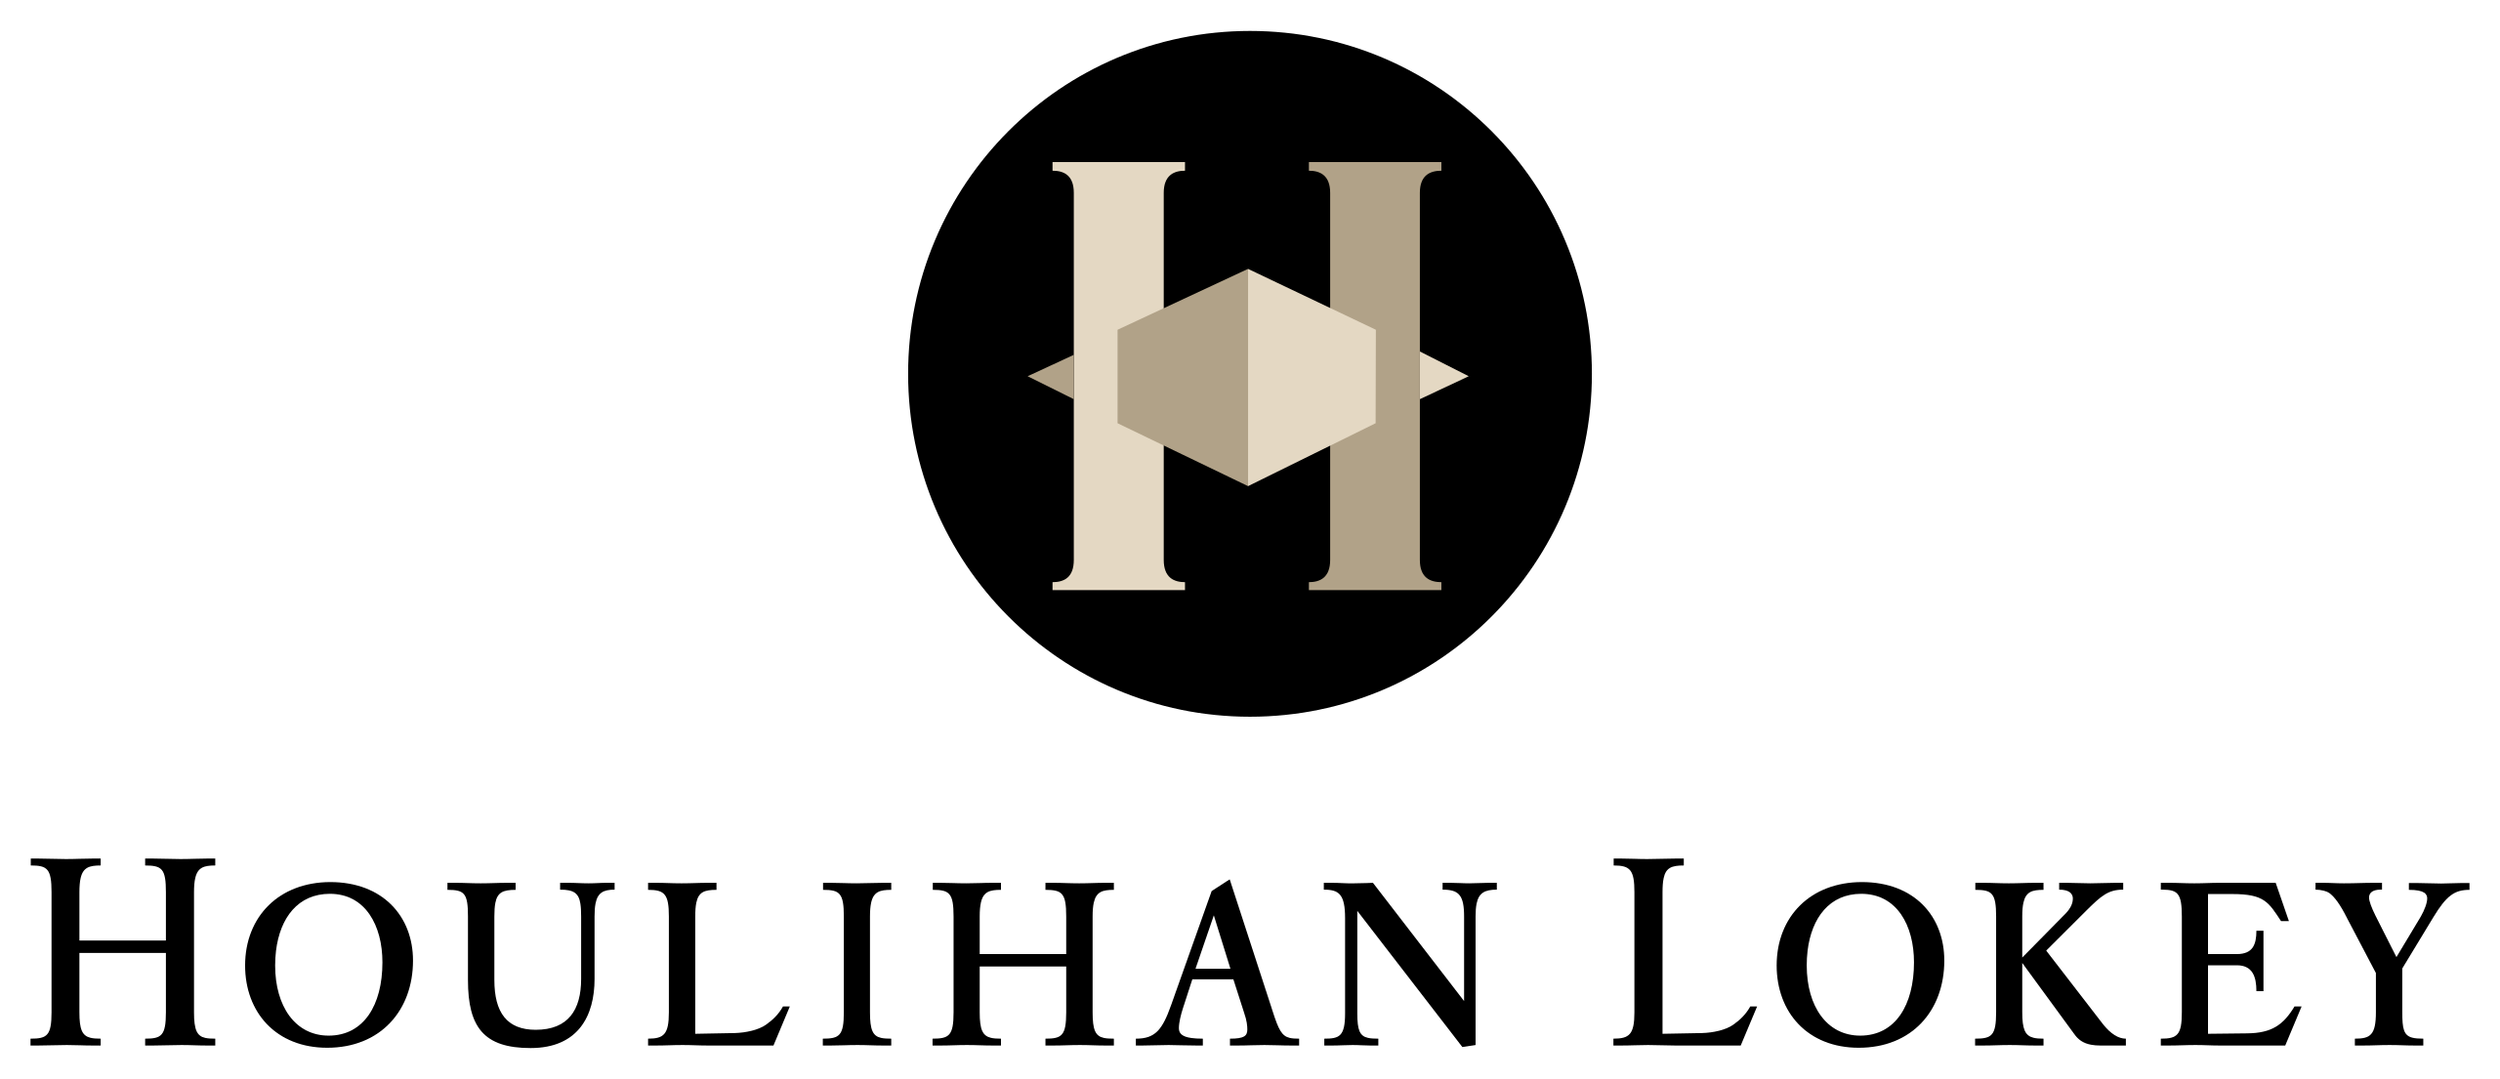 Houlihan_Lokey_logo.svg.png